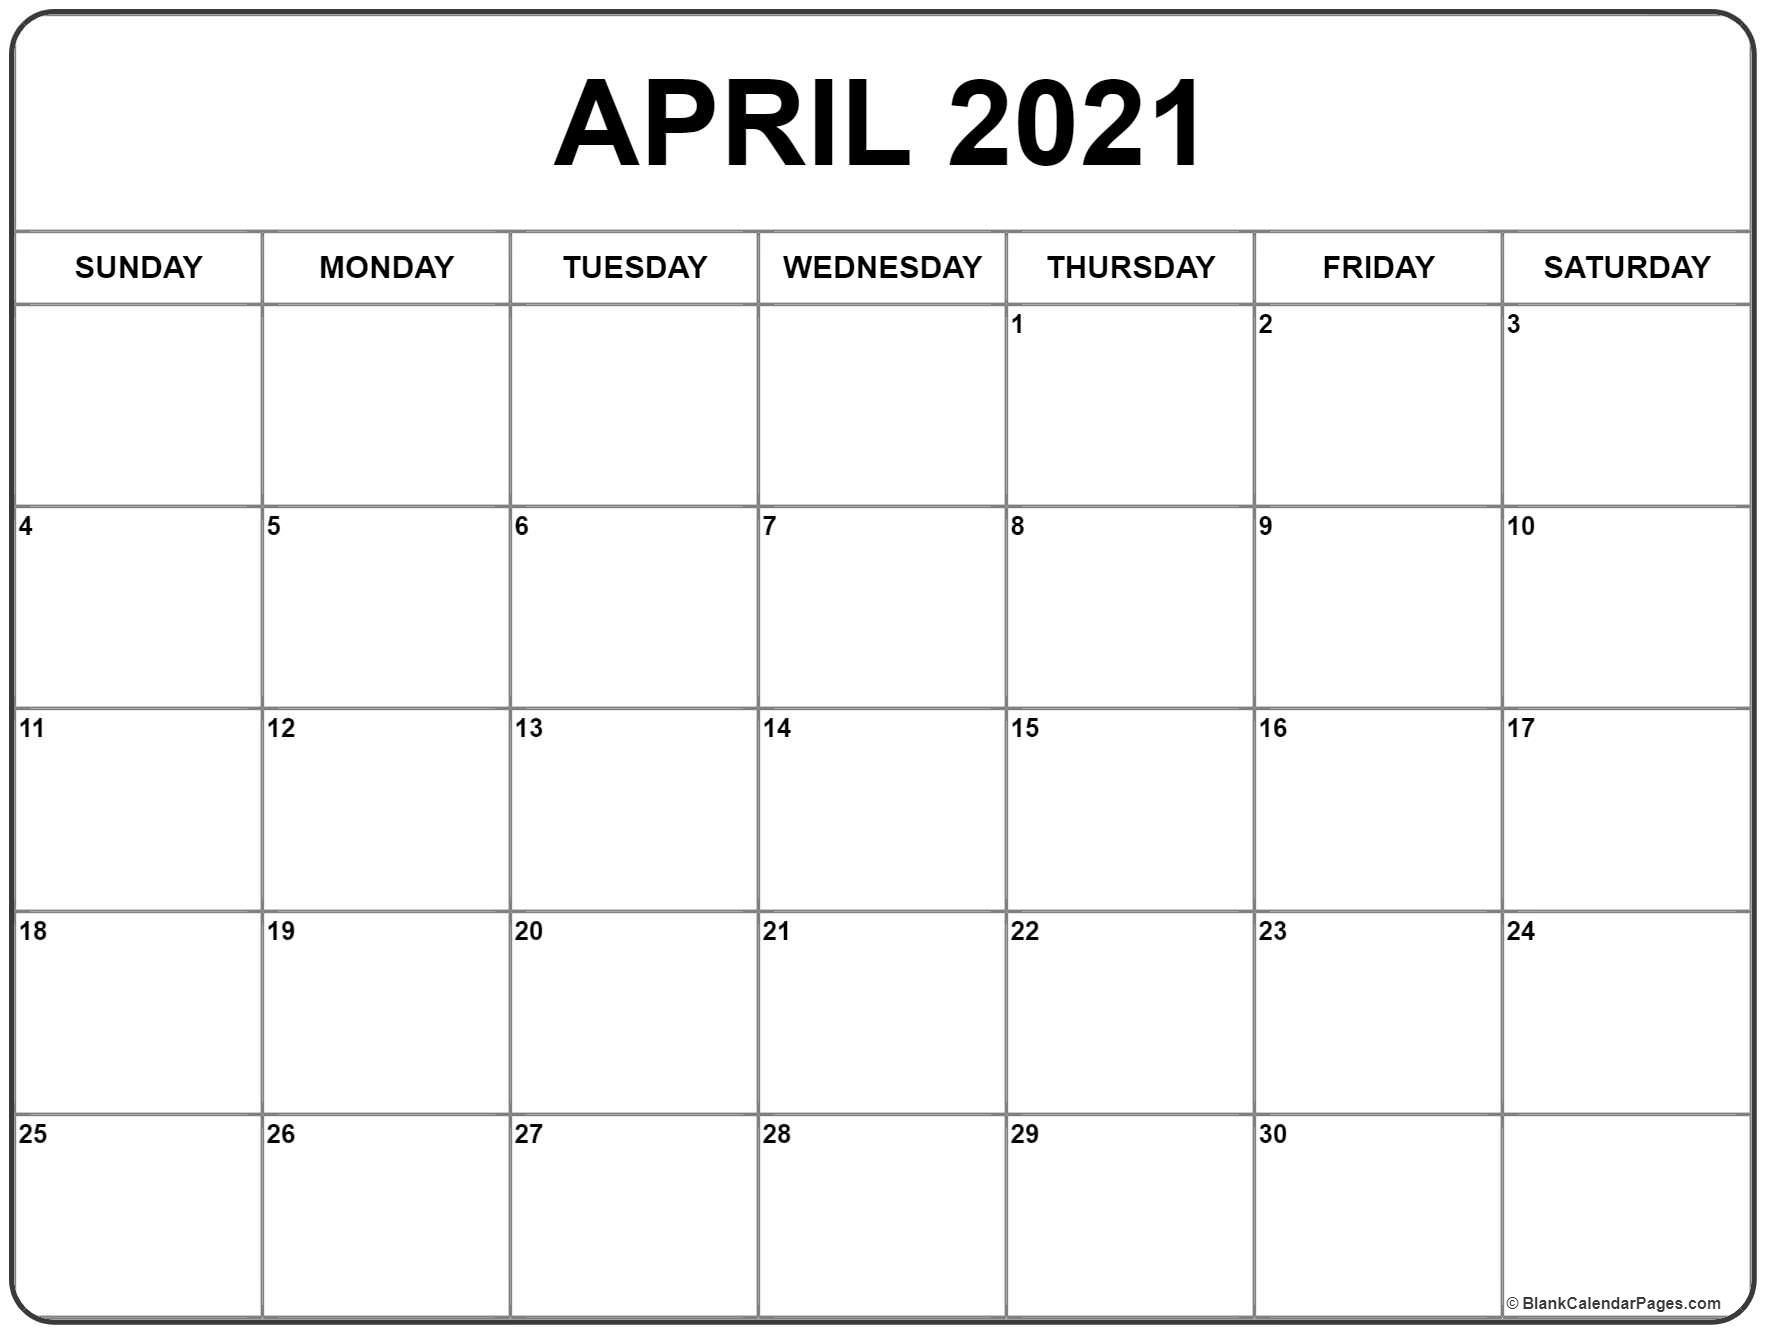 April 2021 Calendar | Free Printable Monthly Calendars